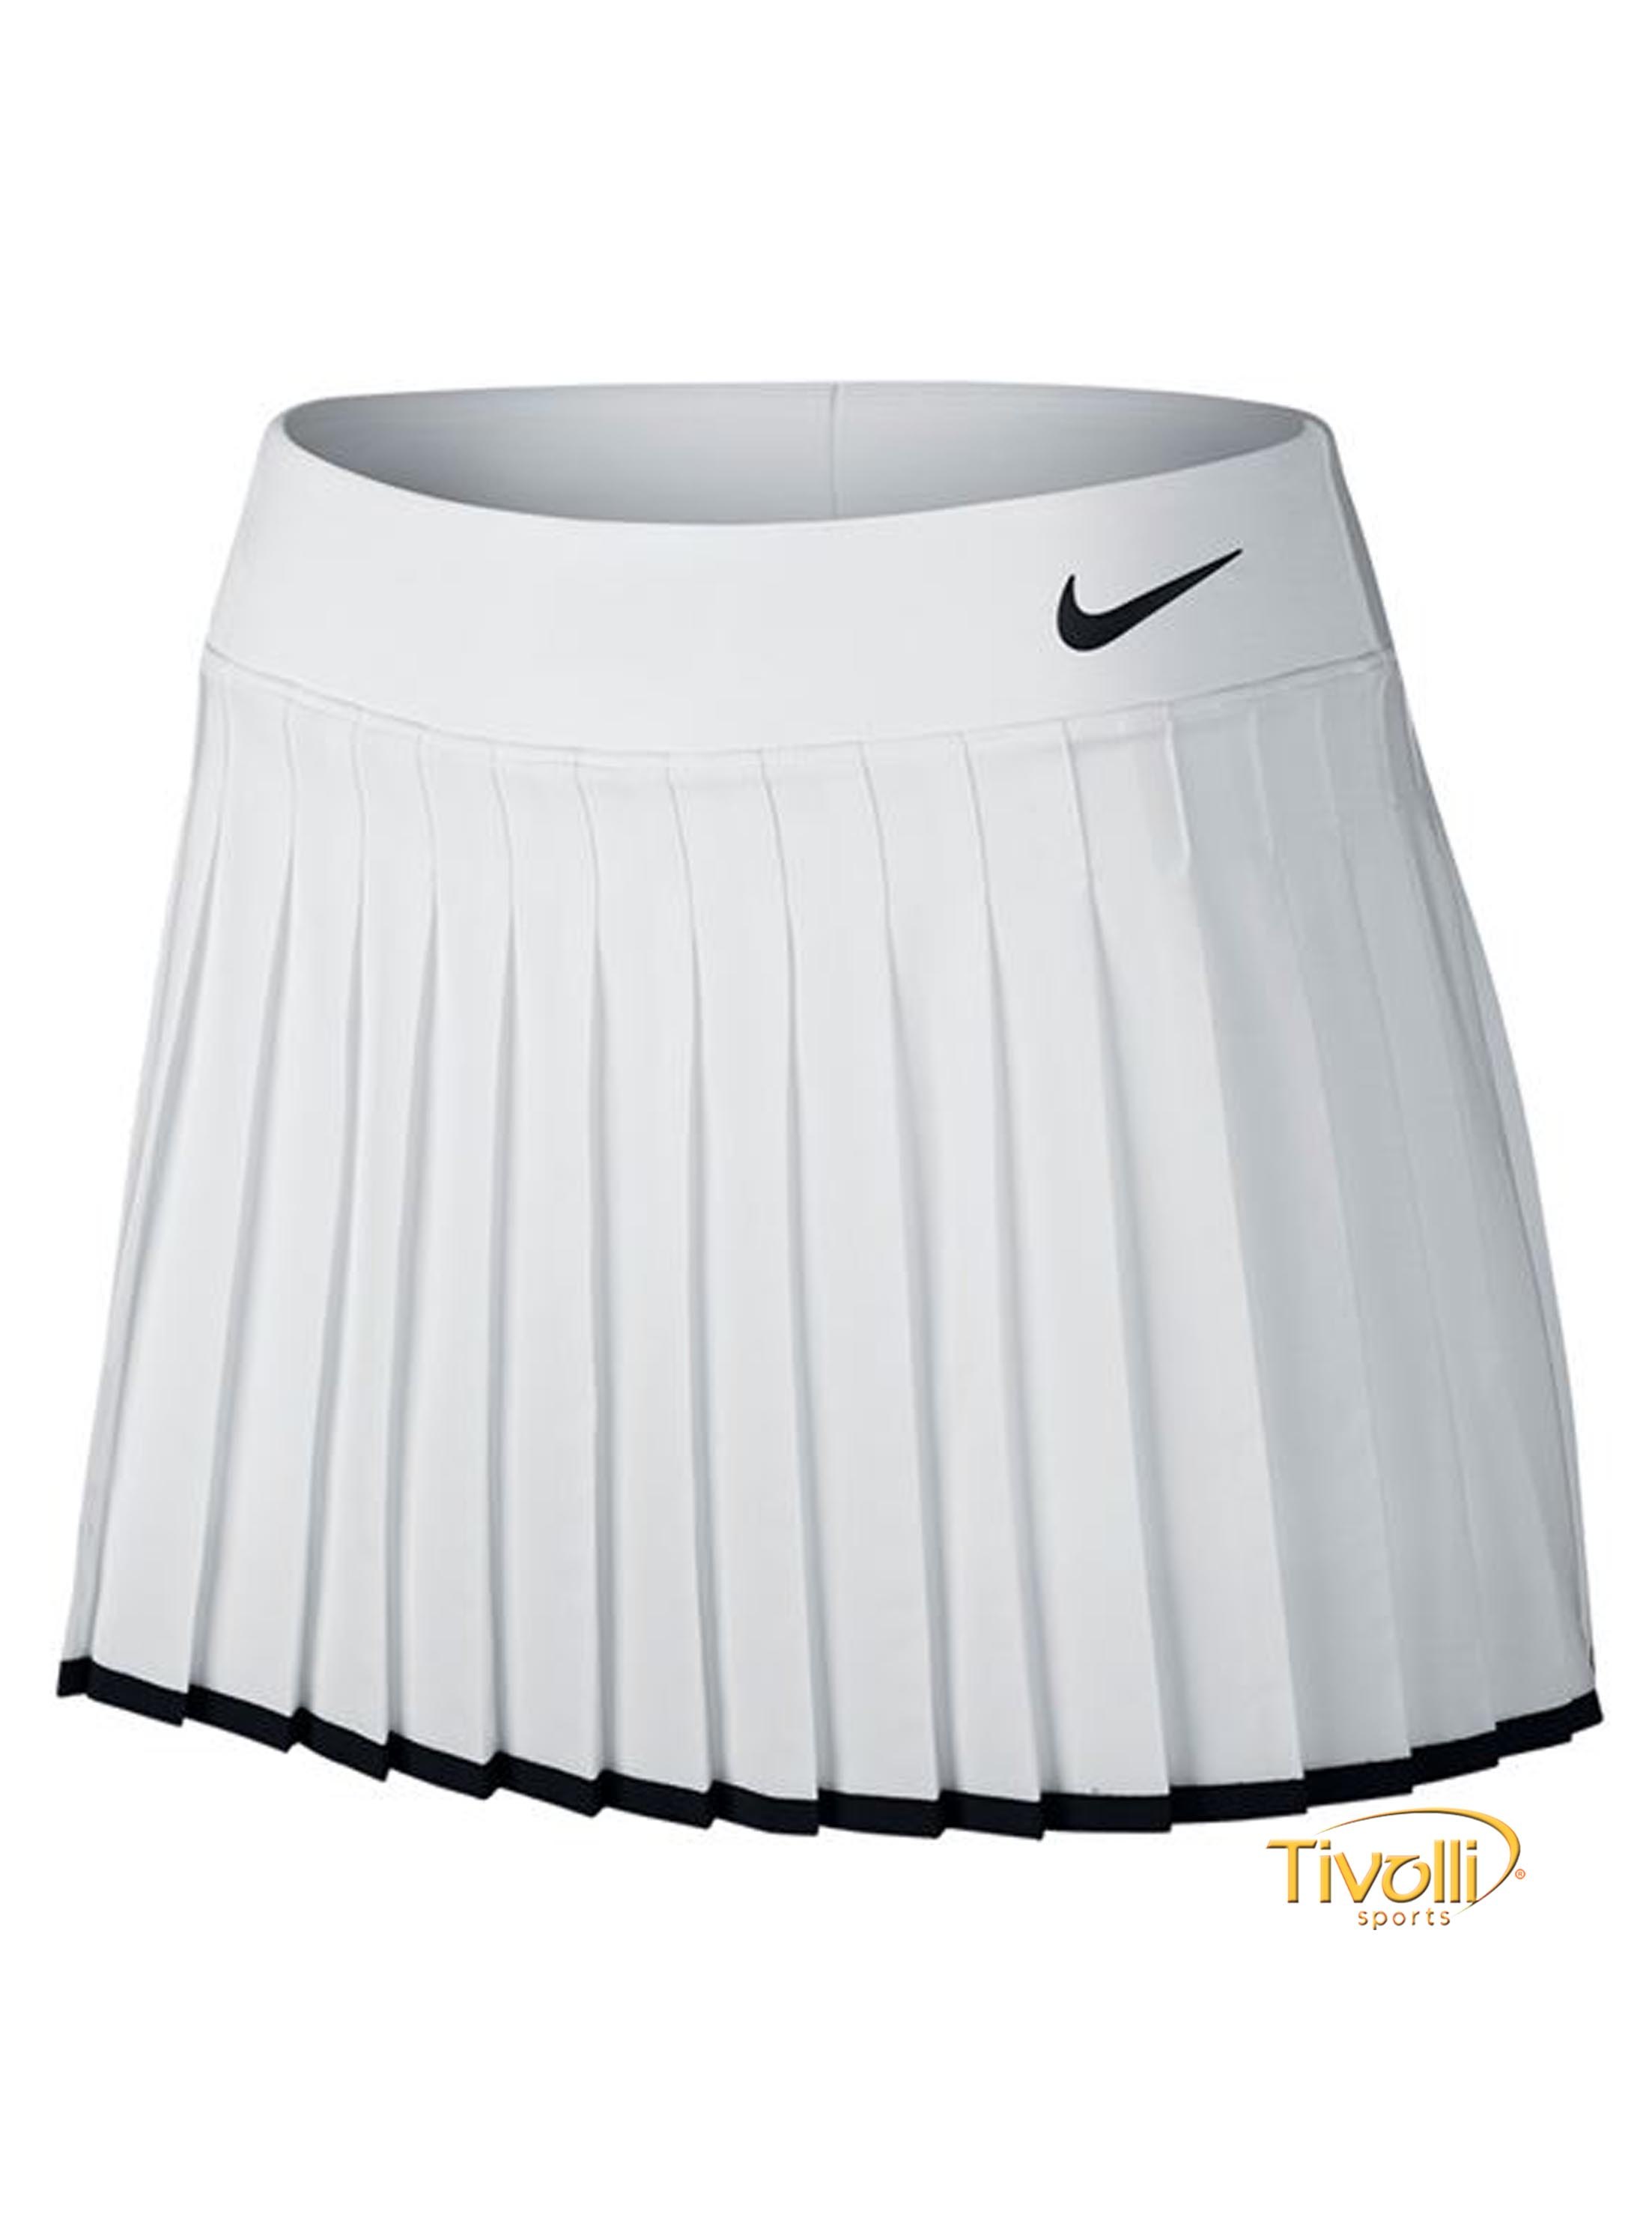 Купить юбку цена. Теннисная юбка Nike Maria плиссированная. Белая теннисная юбка Nike dr0287-808. Теннисная юбка найк плиссированная. Женская юбка теннисная Nike Court Dri-Fit advantage Pleated Tennis skirt - Black/White.